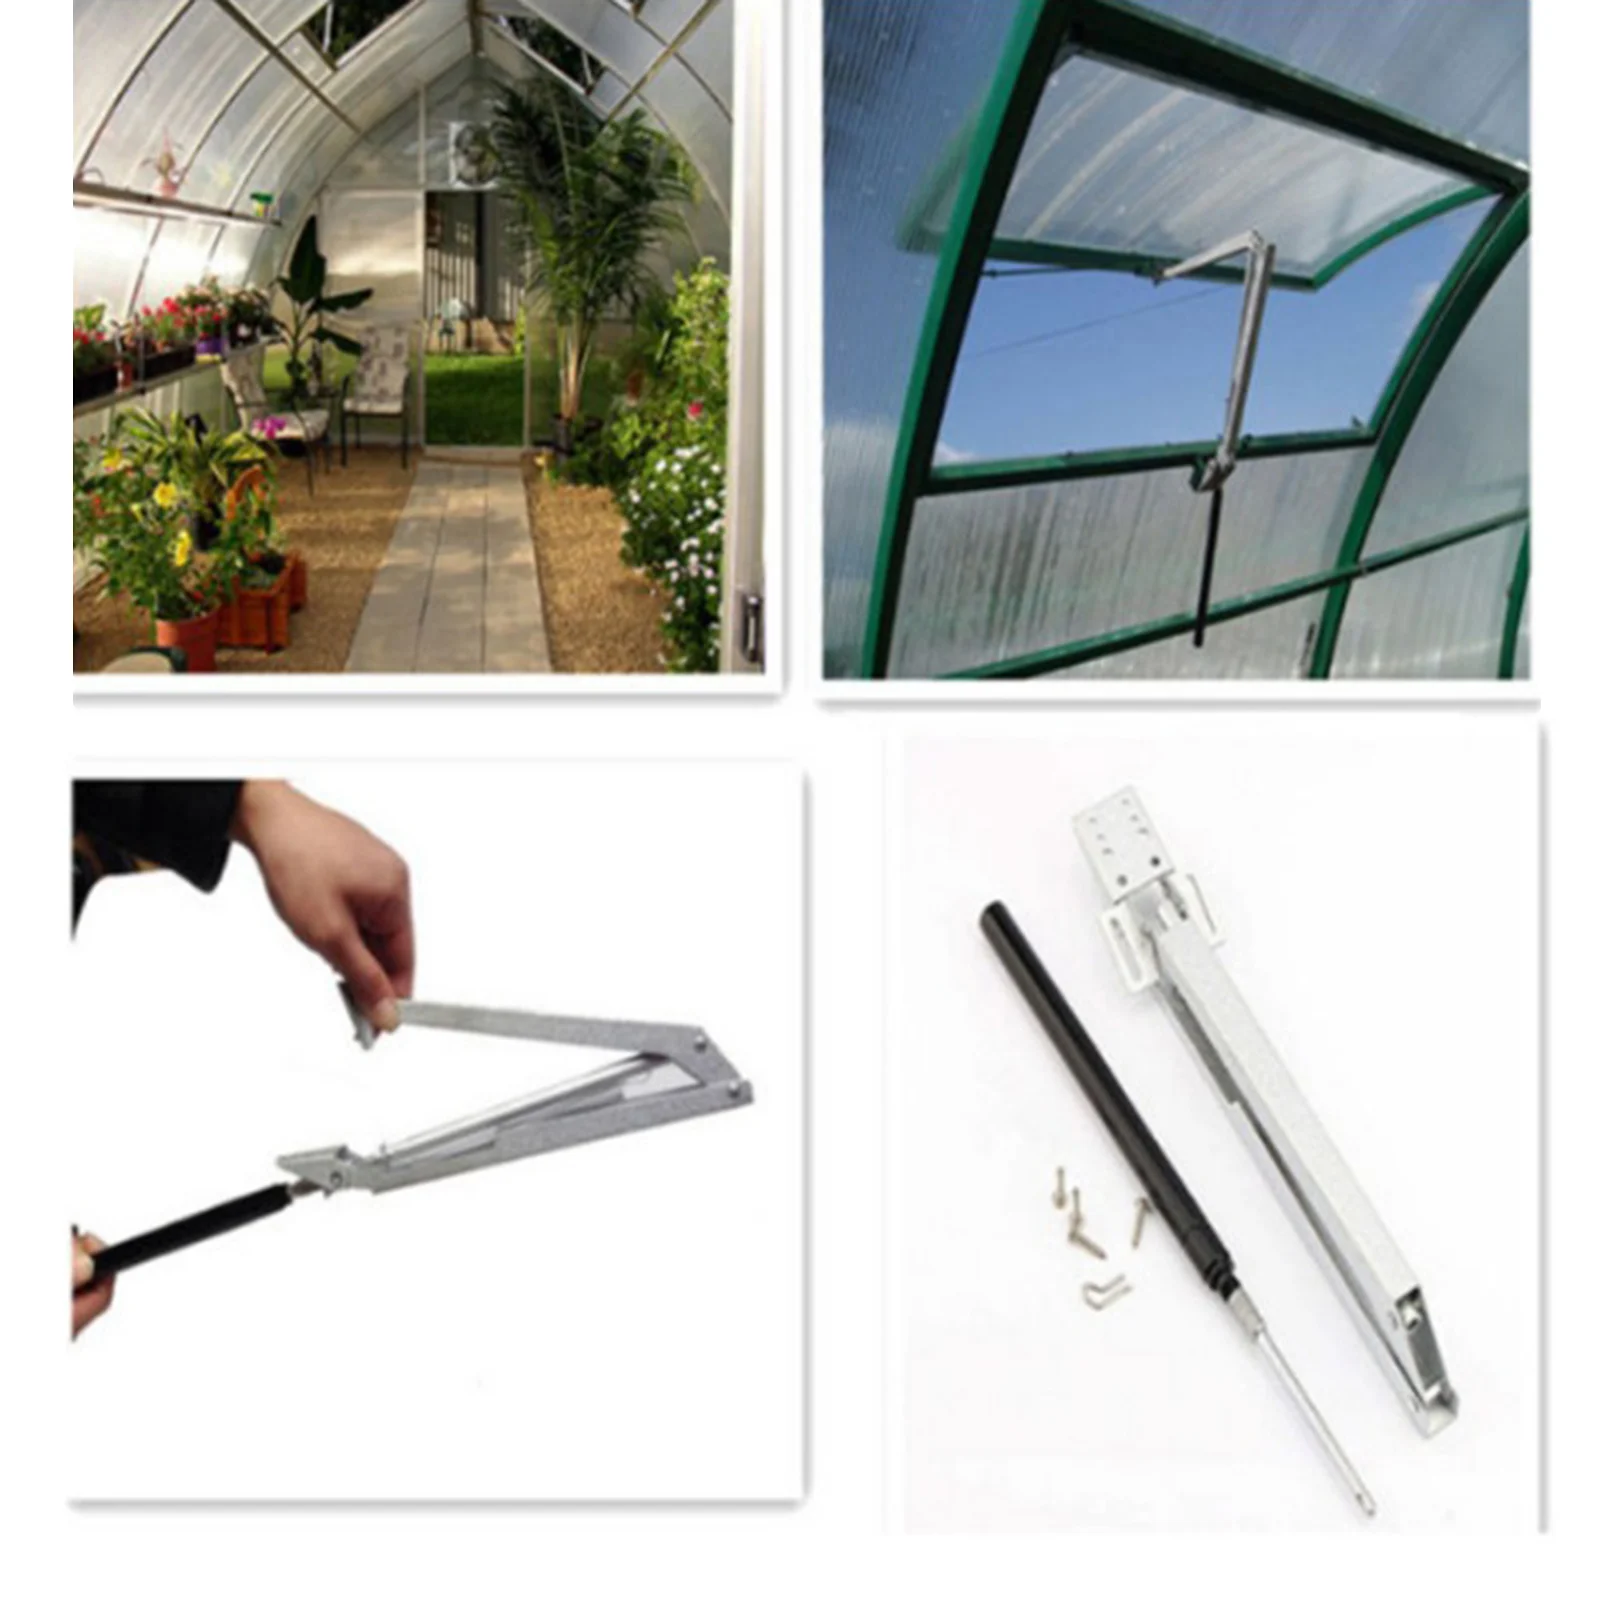 Solar Heat Sensing Automatic Greenhouse Window Opener Adjustable Auto Vent Opener, Lifts 7kg